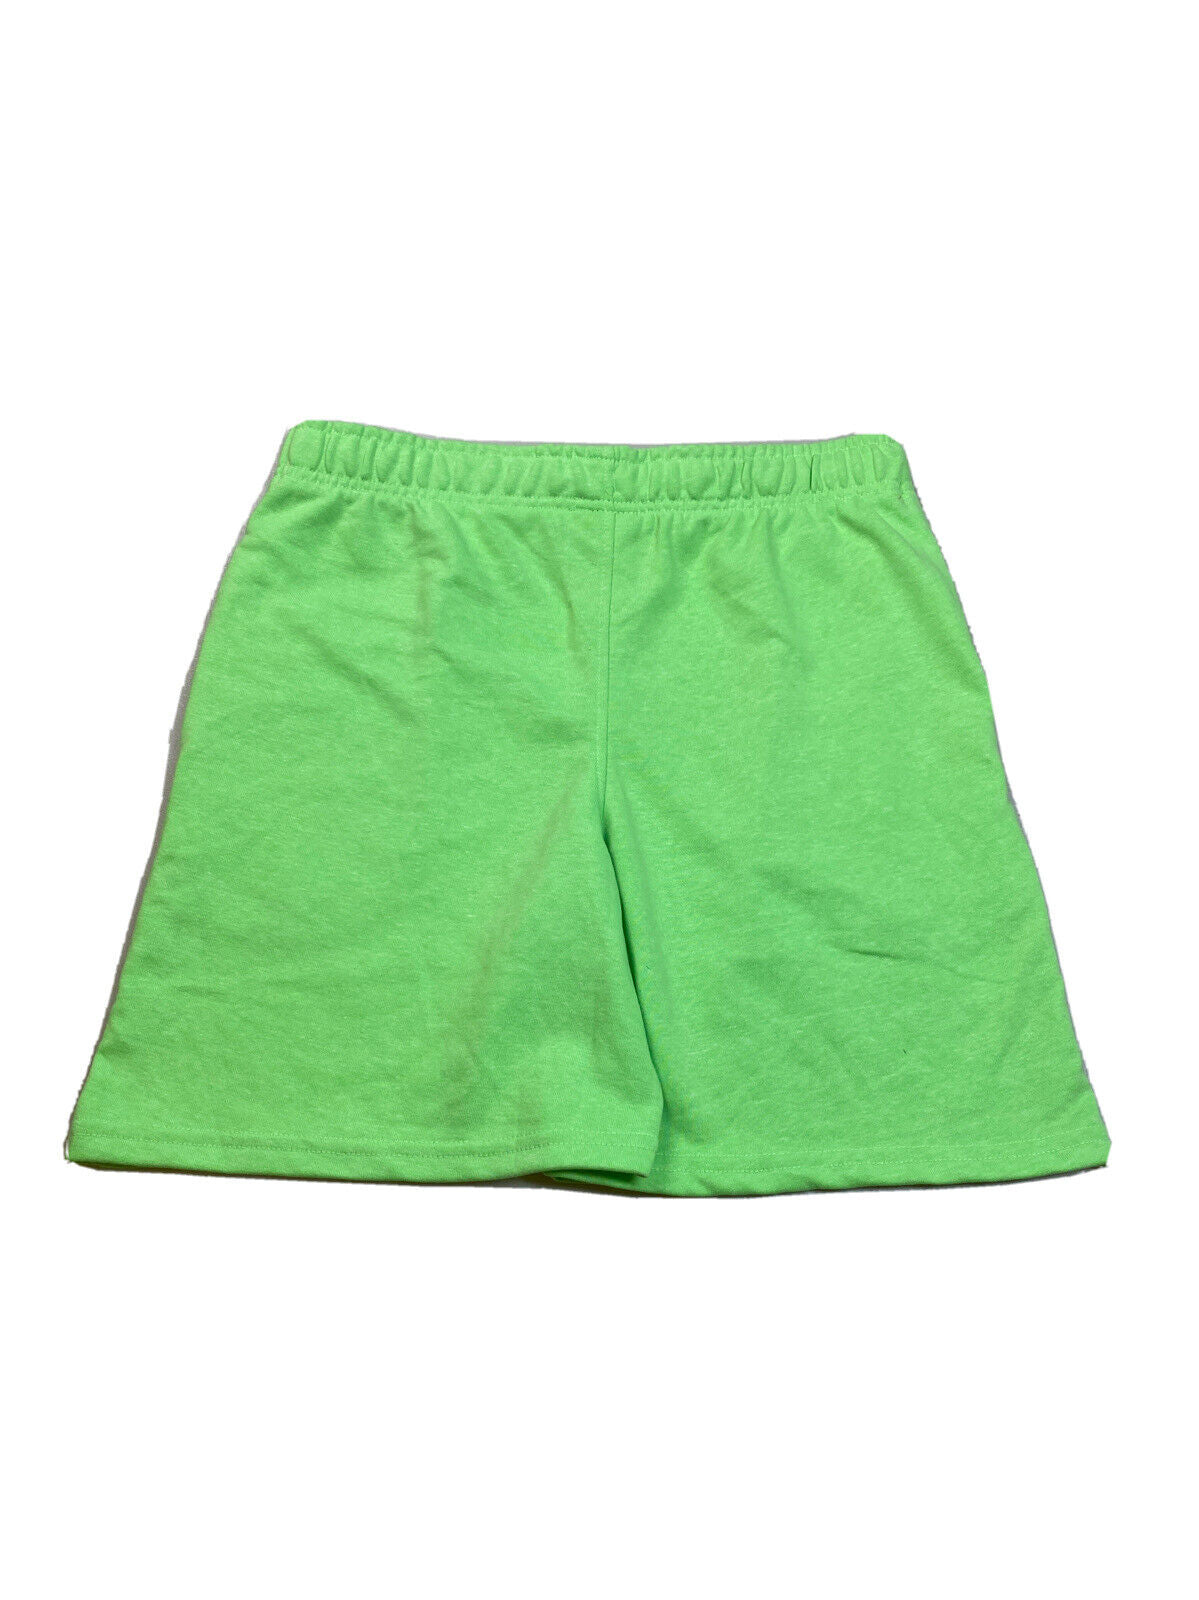 NEW Gen 2 Women's Green Michigan State University Terry Sweat Shorts - XL